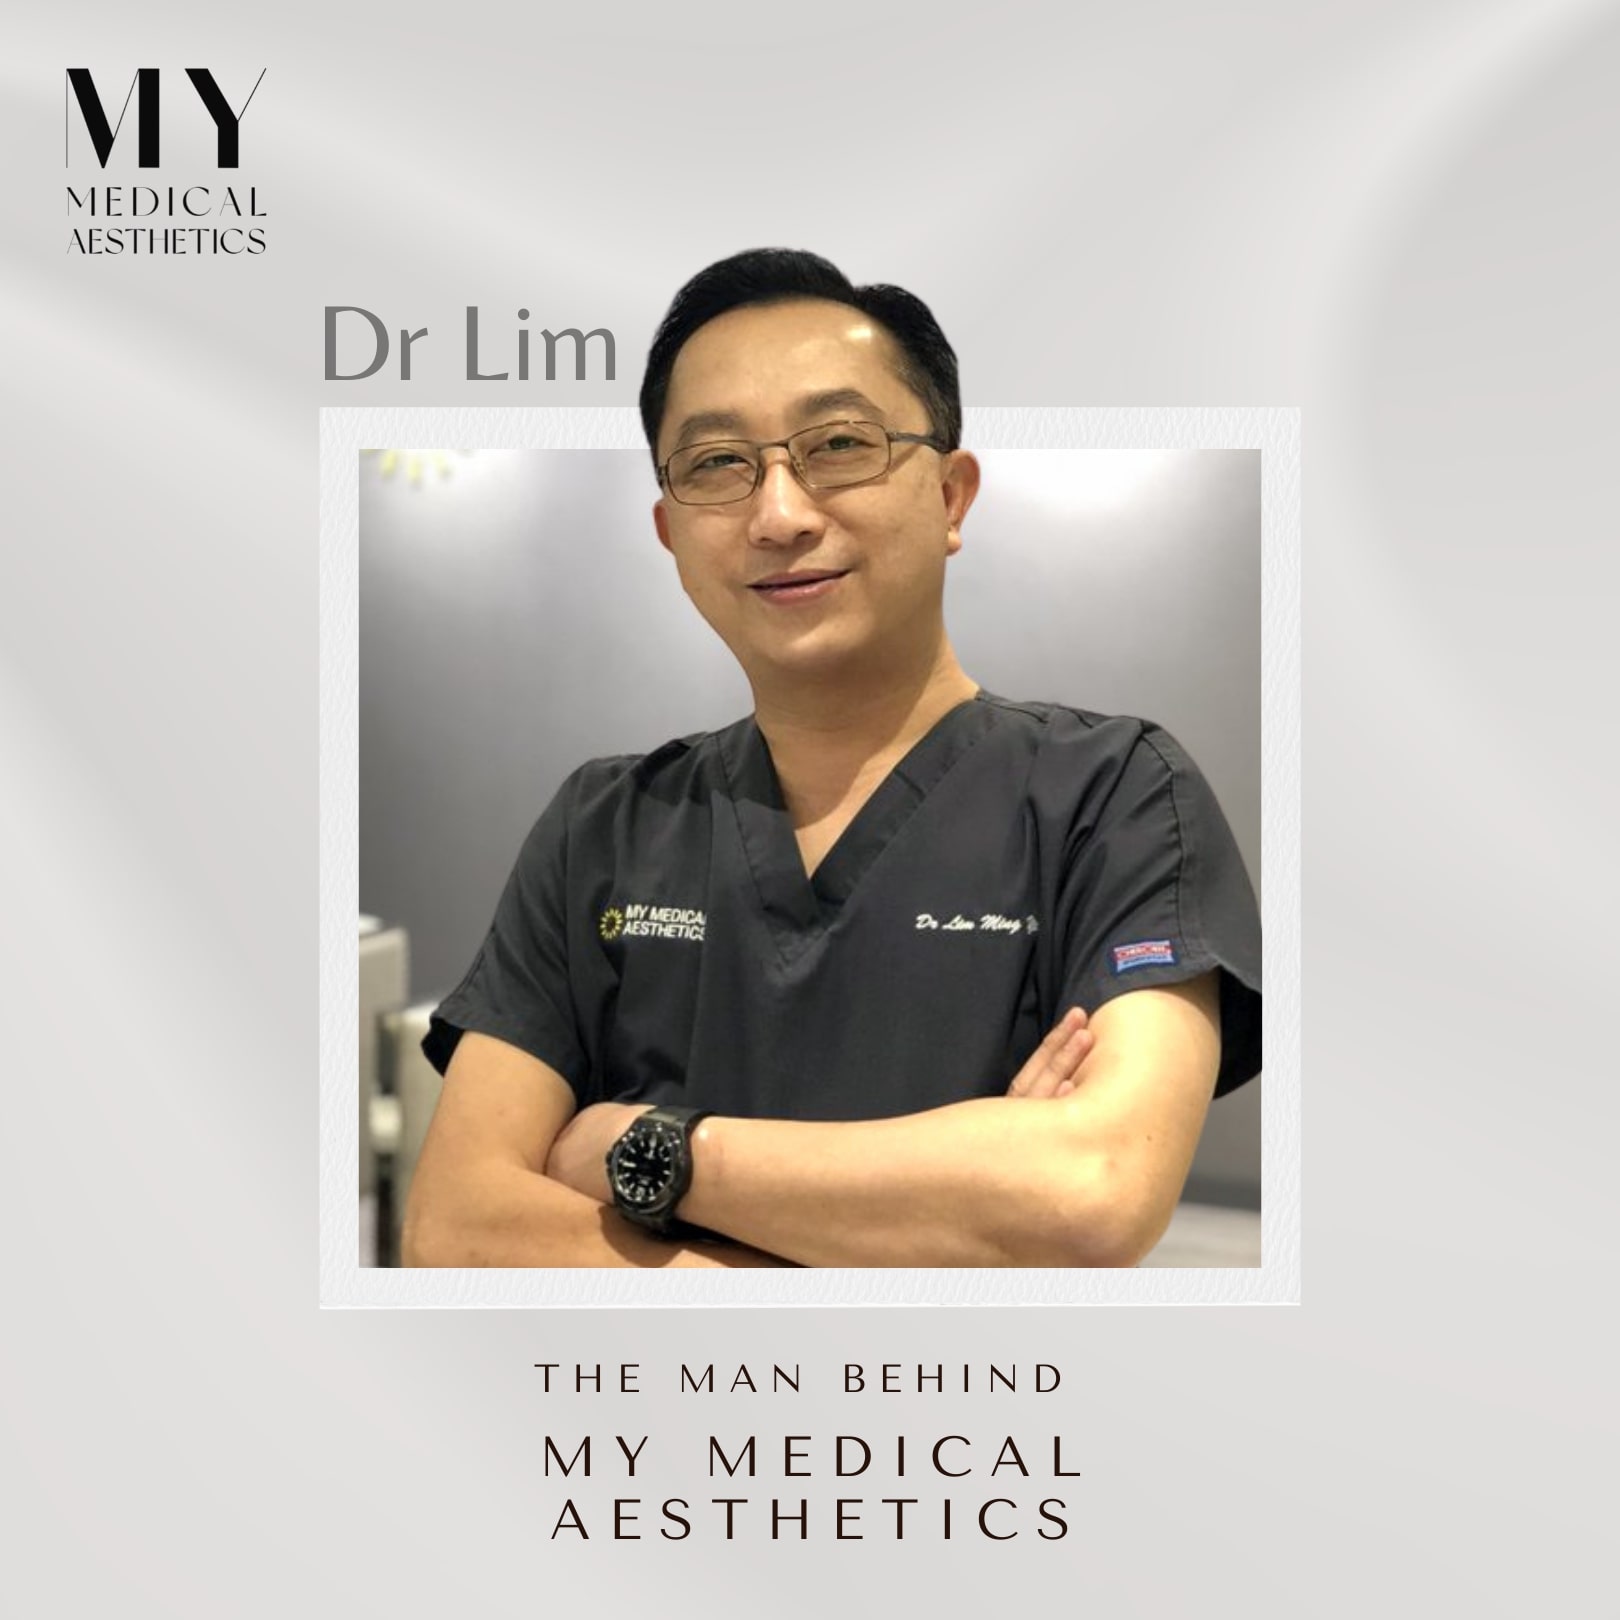 My Medical Aesthetic Dr. Lim